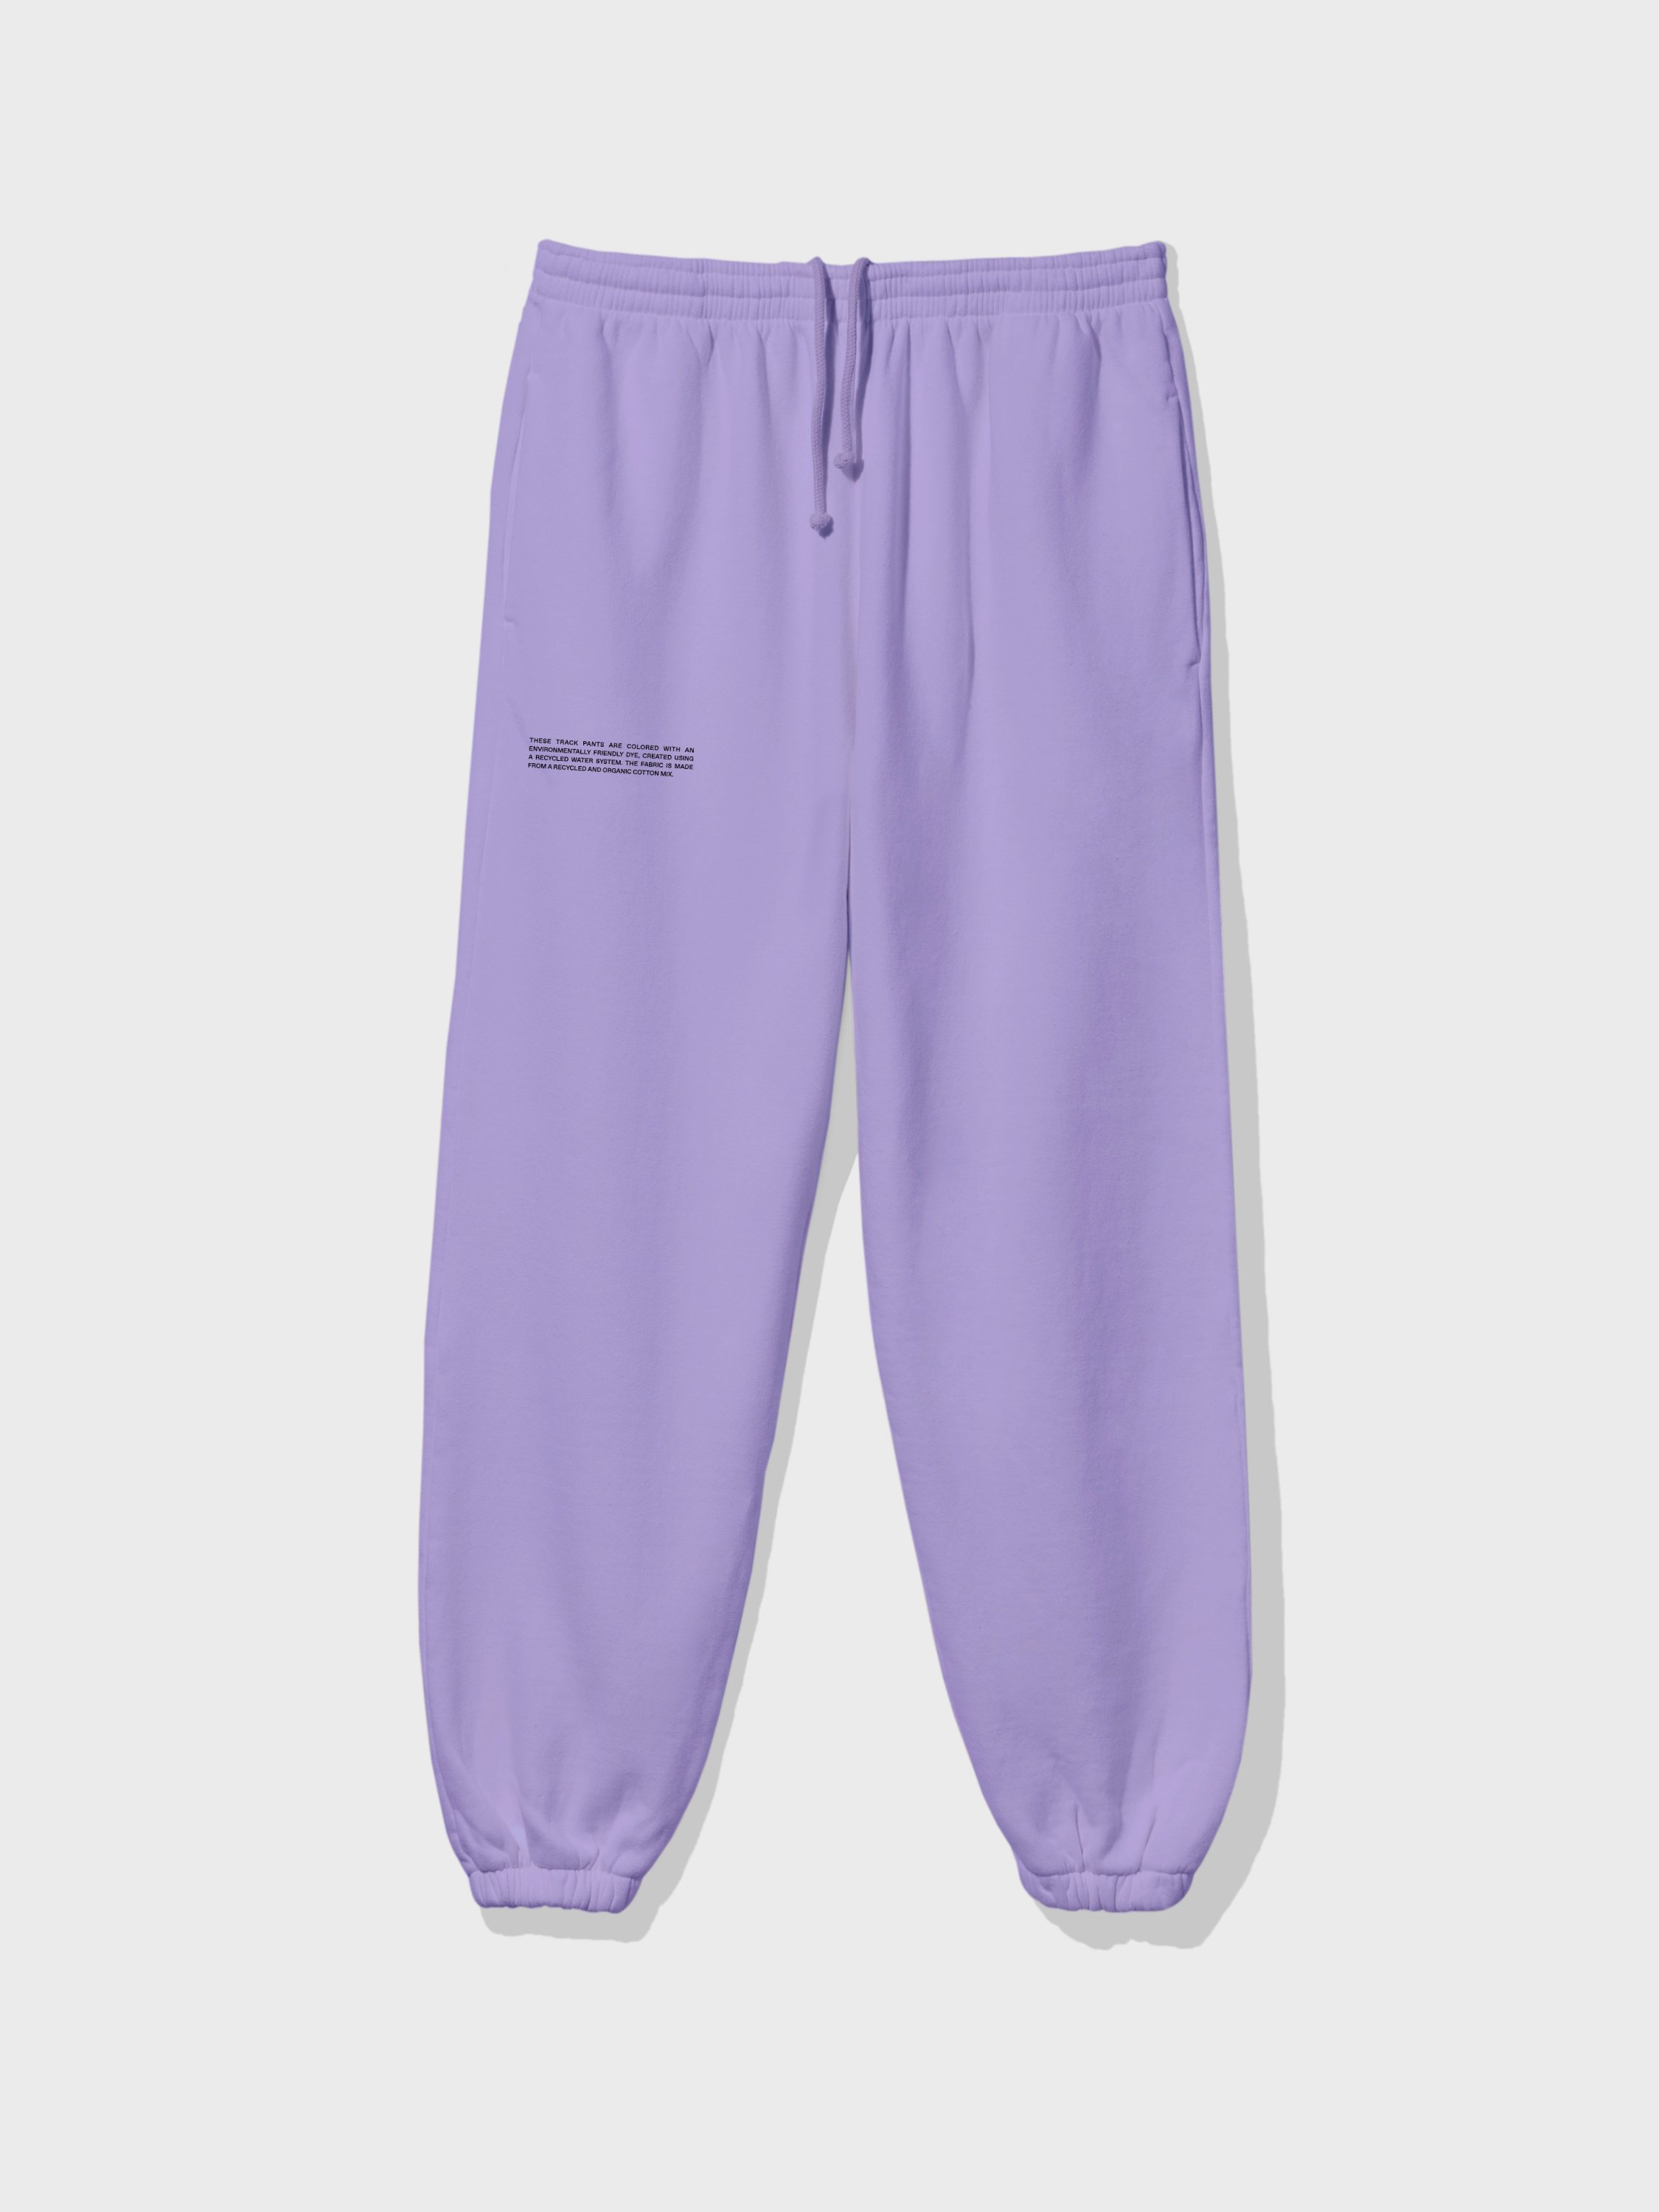 purple sweatpants outfit